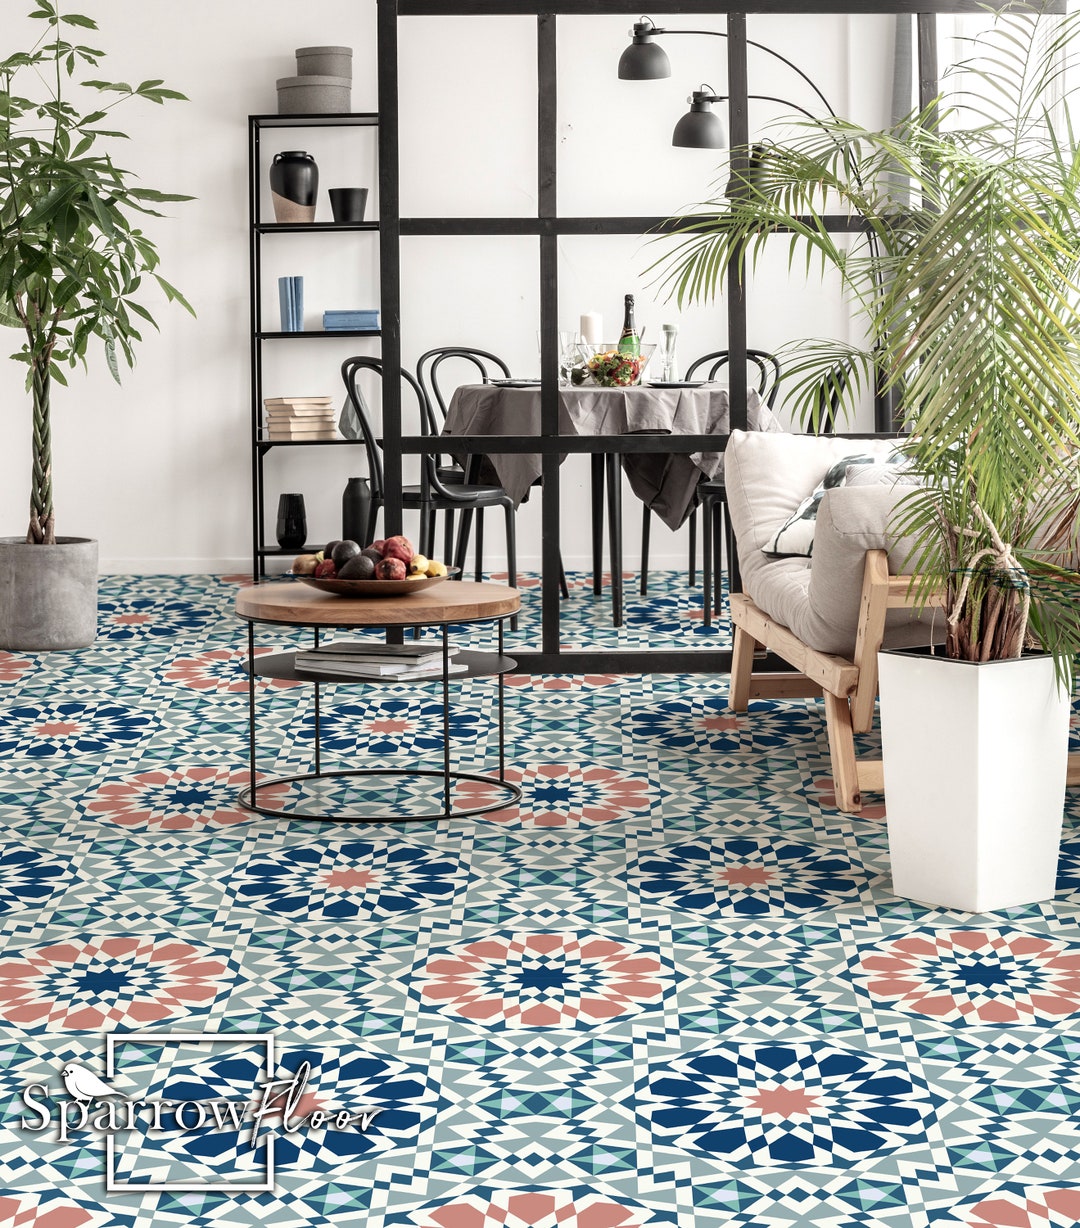 Moroccan Vinyl Rug Runner in Tile Effect Pattern for Kitchen, Hallway and  Bathroom Floors, Decorative Linoleum PVC Mat Marrakesh 